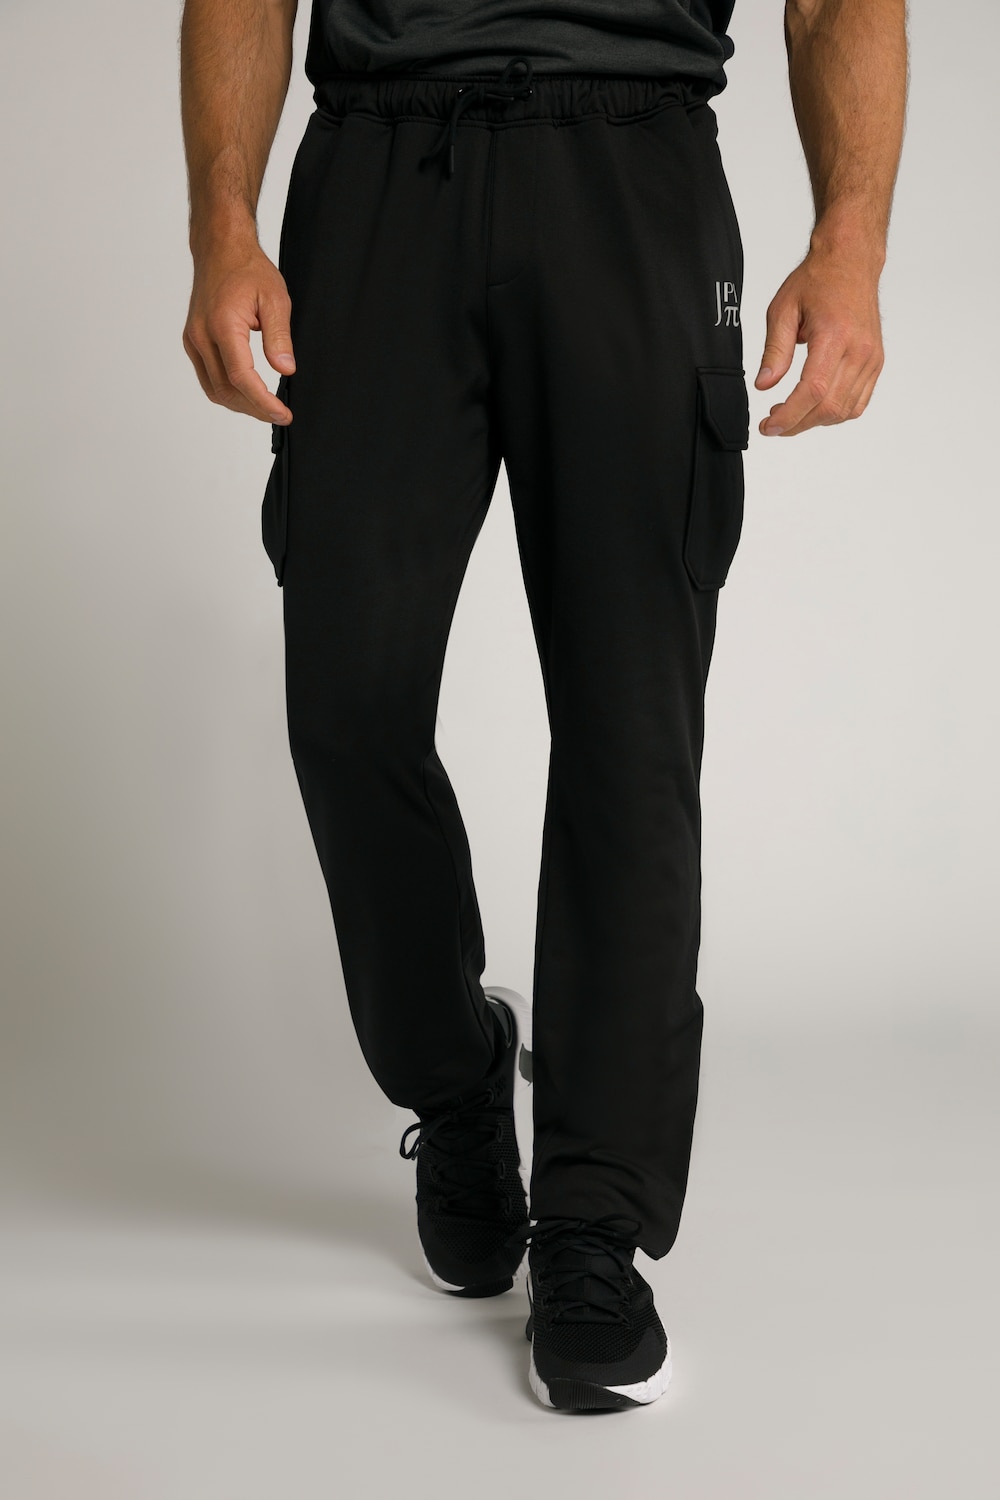 grandes tailles pantalon cargo technique jay-pi outdoor, femmes, noir, taille: xxl, polyester, jay-pi